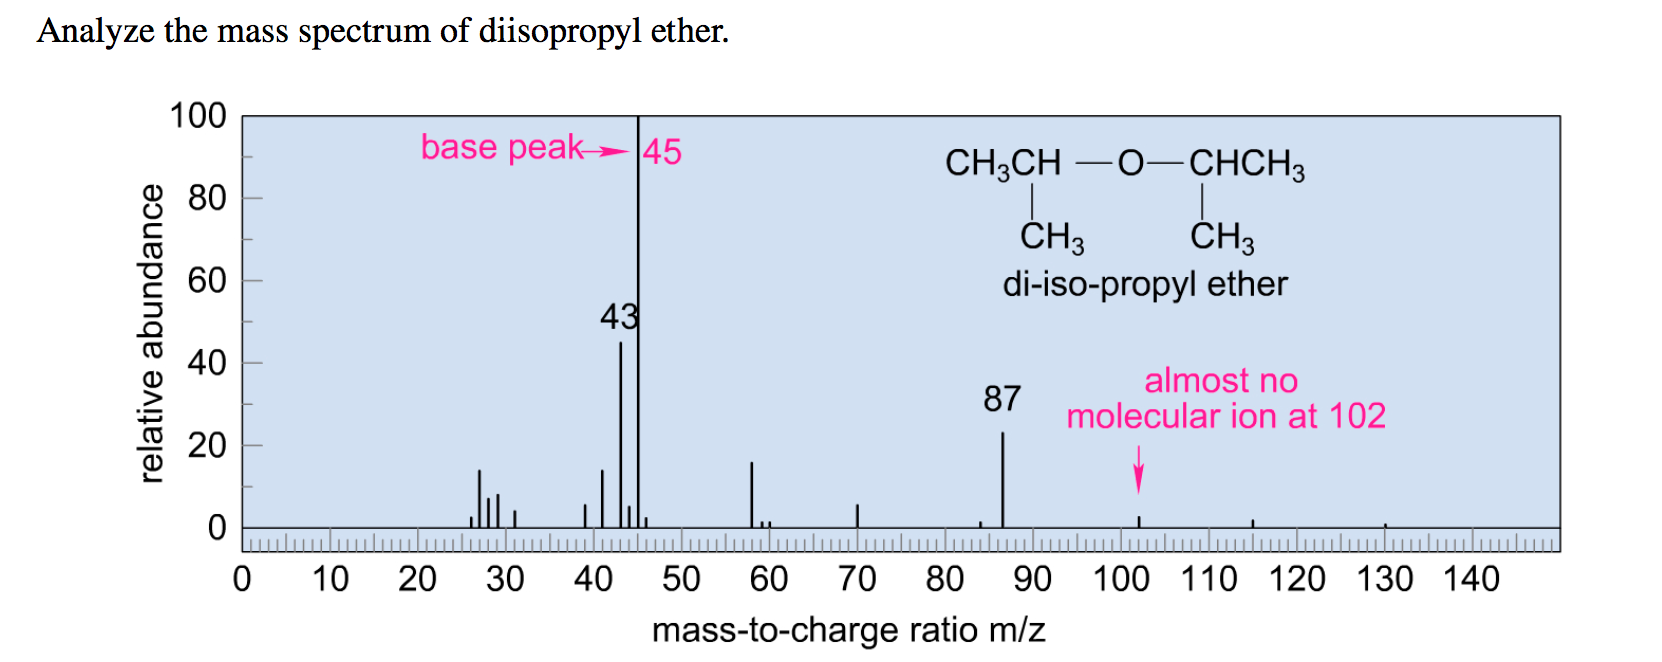 Analyze the mass spectrum of diisopropyl ether.
